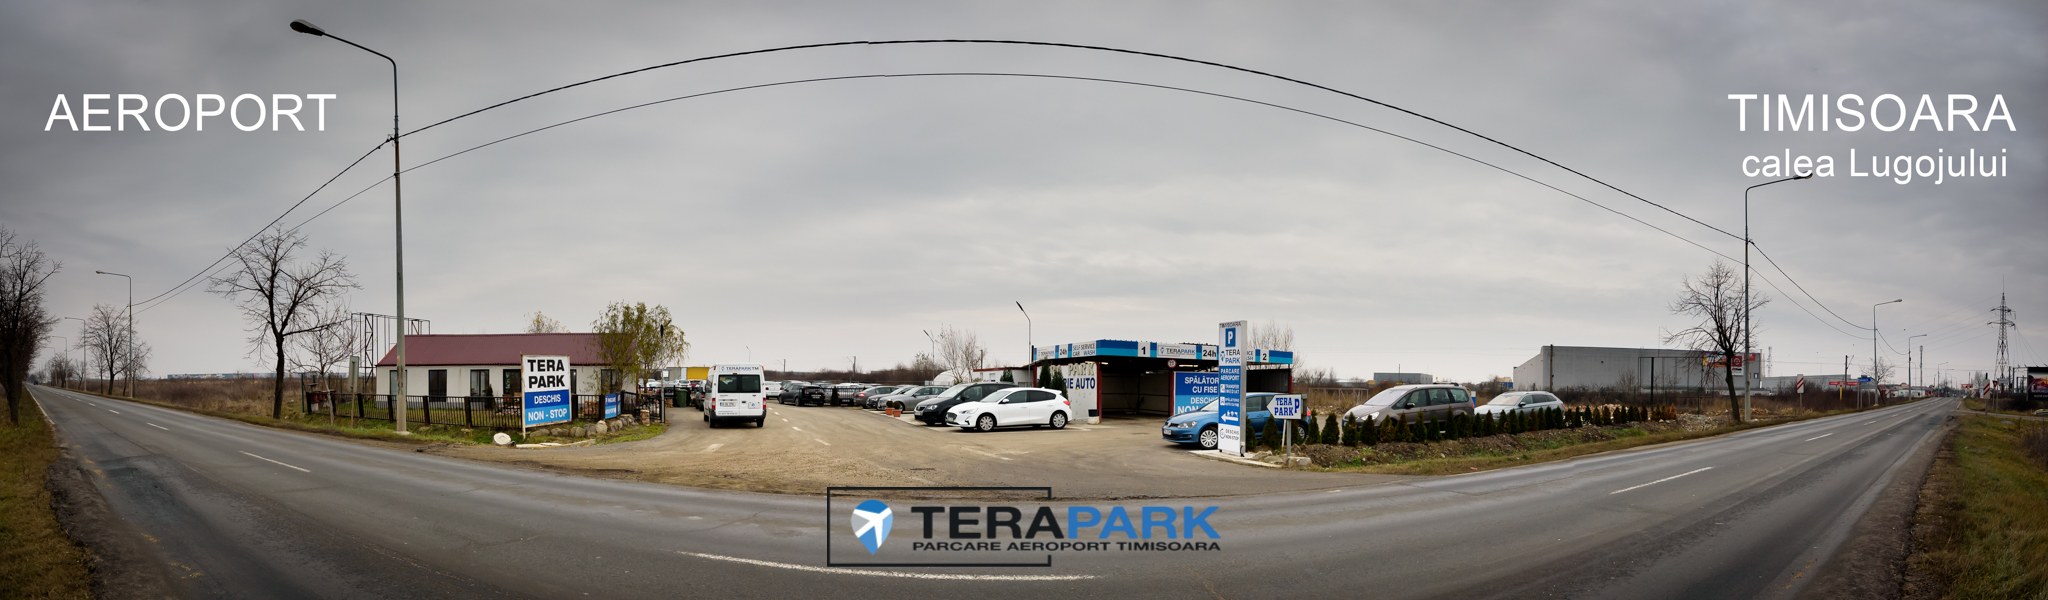 Parcare aeroport timisoara TERAPARK TM 